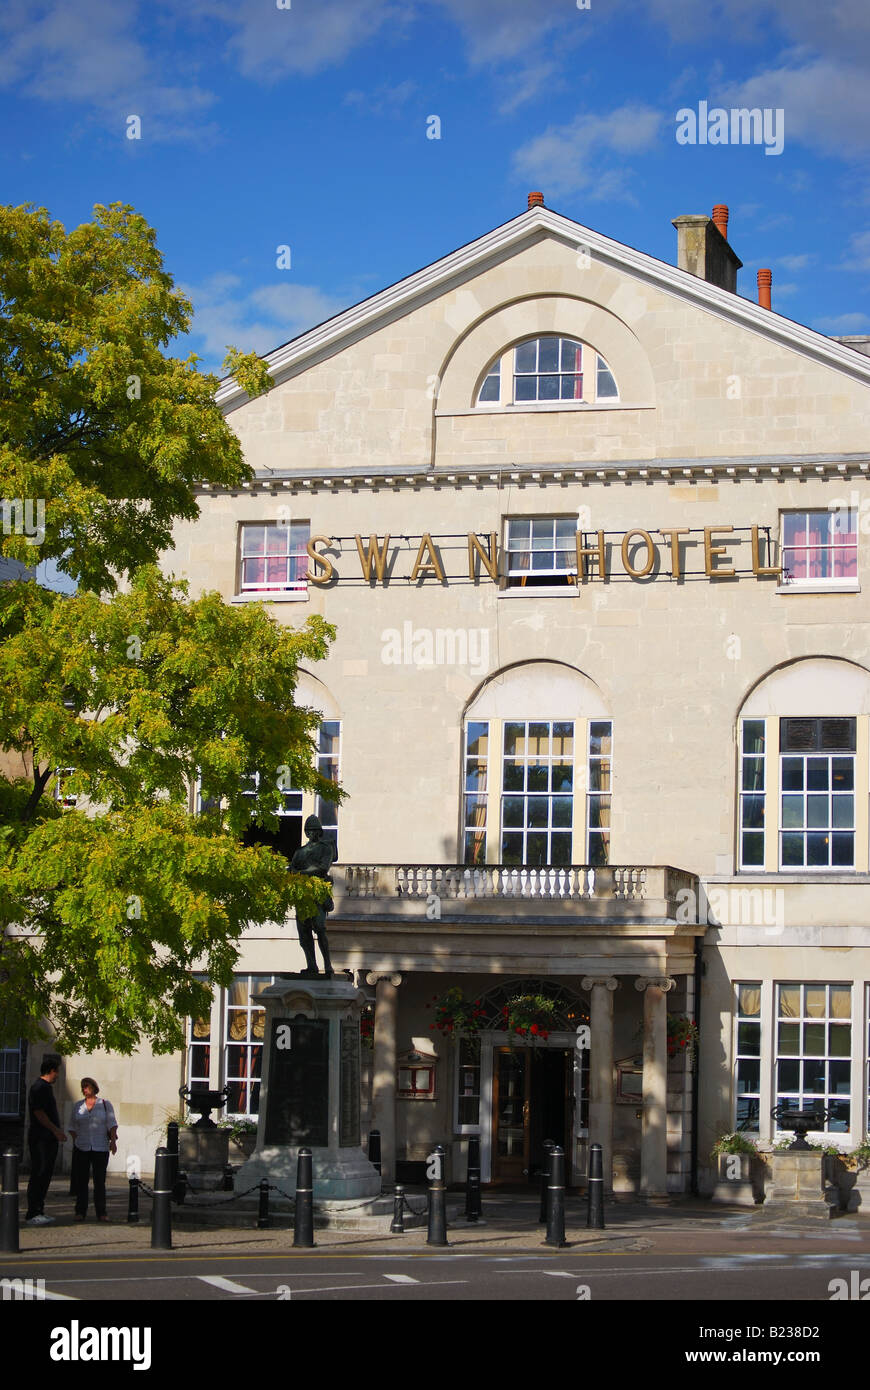 Swan Hotel am Fluss Great Ouse, Bedford, Bedfordshire, England, Vereinigtes Königreich Stockfoto